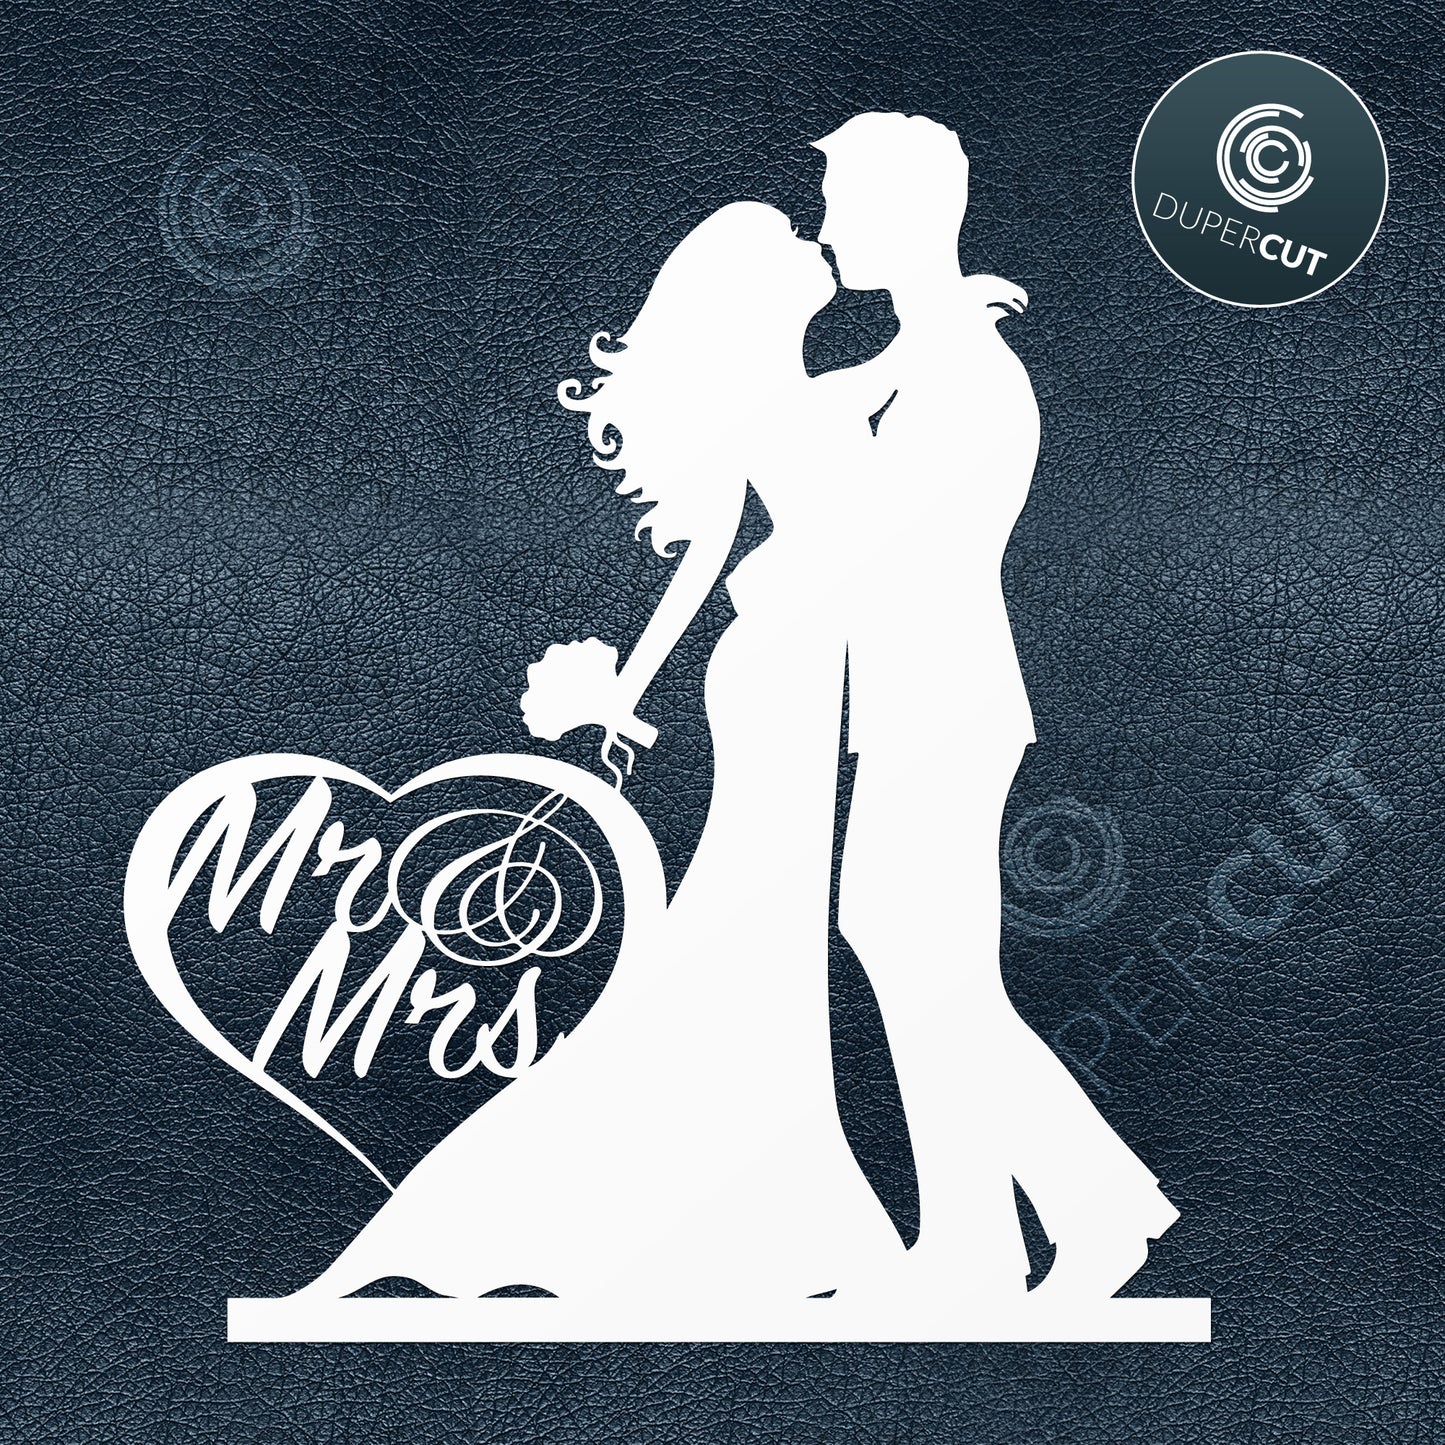 MR & MRS - DIY wedding cake topper template - SVG PDF DXF cutting files for laser and digital machines, Glowforge, Cricut, Silhouette cameo, CNC plasma